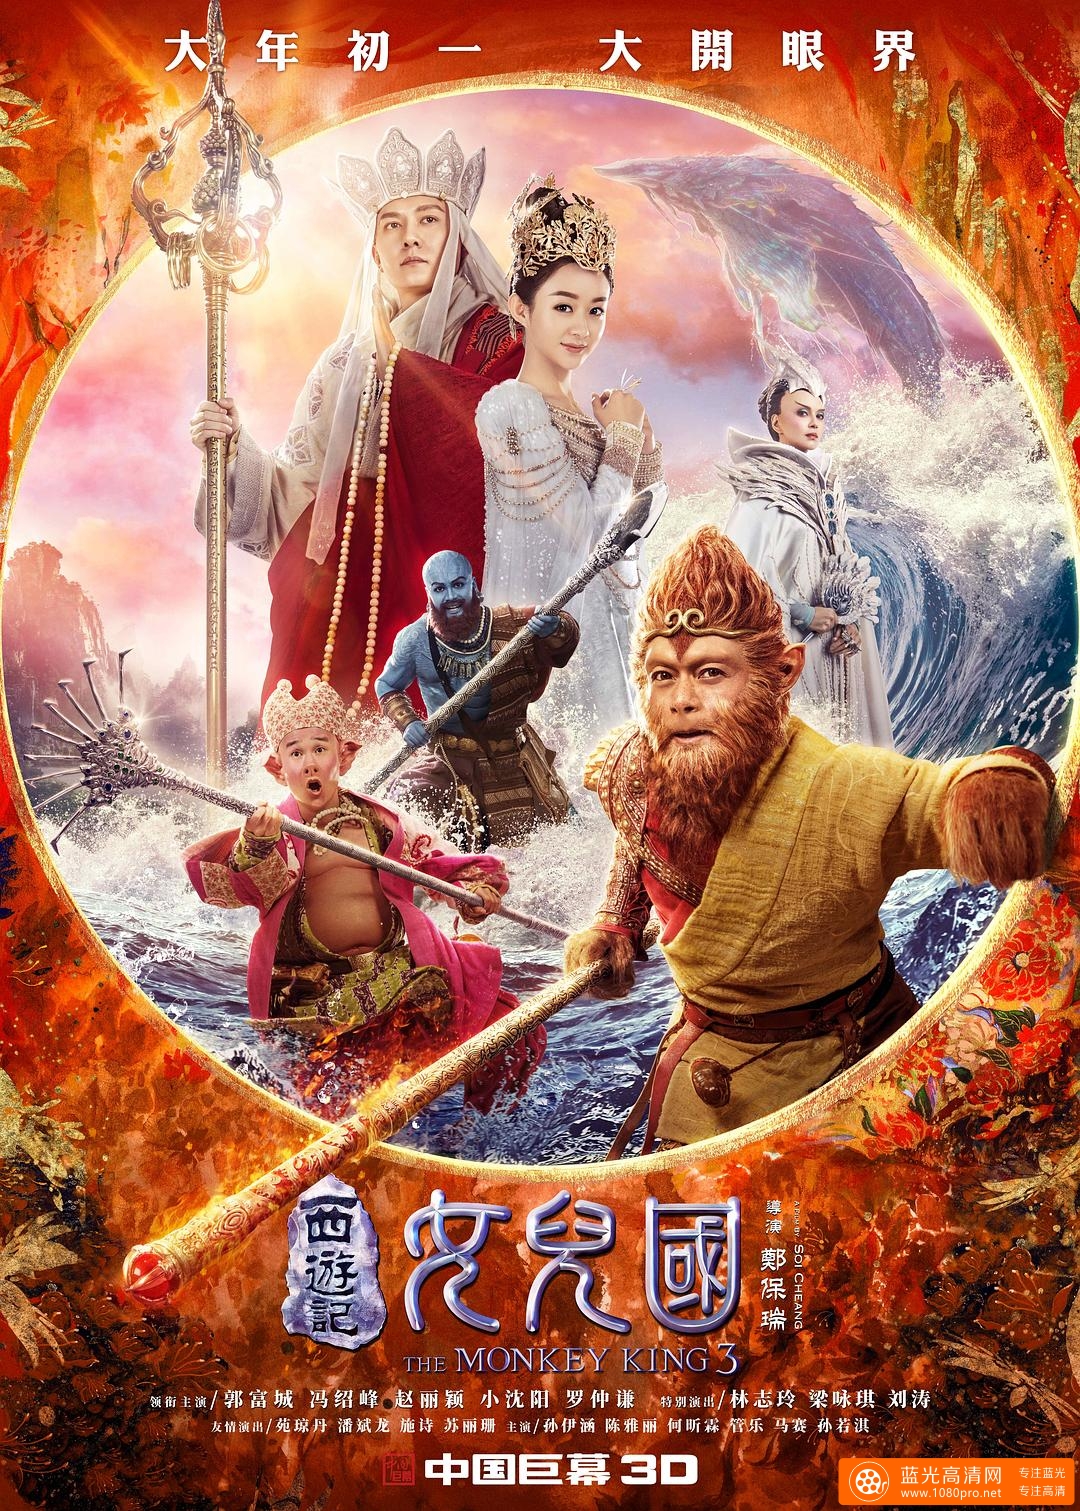 西游记女儿国 The.Monkey.King.3.2018.CHINESE.1080p.BluRay.x264-iKiW 12.47GB